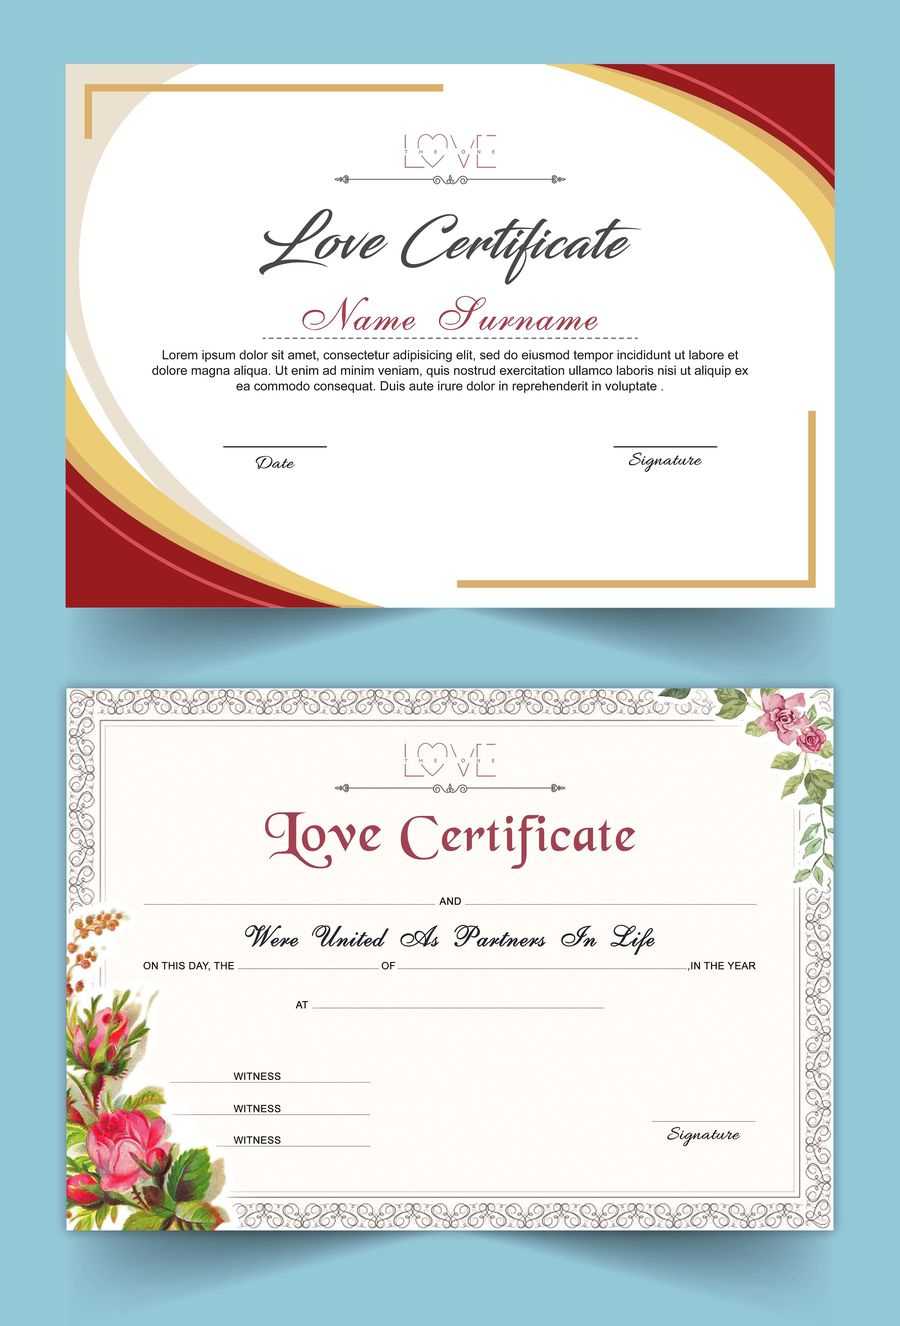 Entry #15Satishandsurabhi For Design A Love Certificate Inside Love Certificate Templates